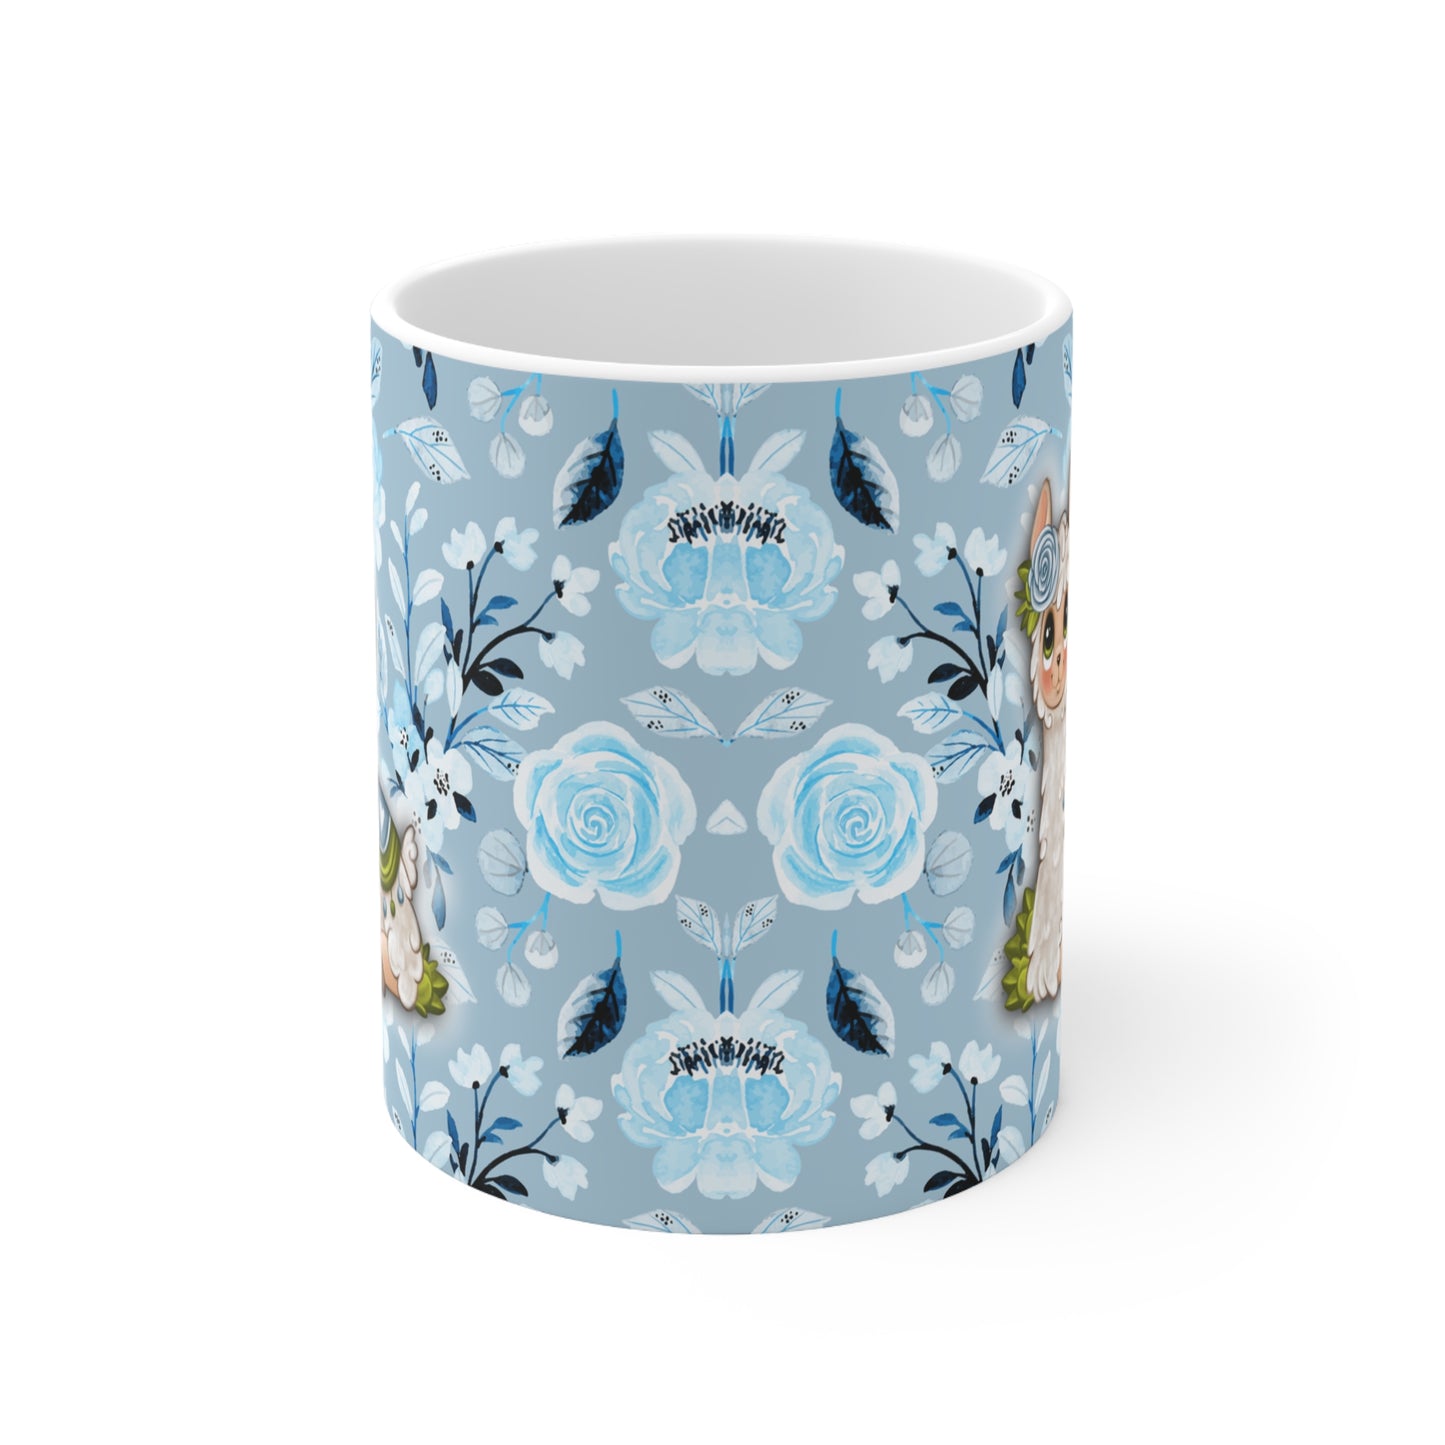 Adorable Llama Ceramic Mug 11oz